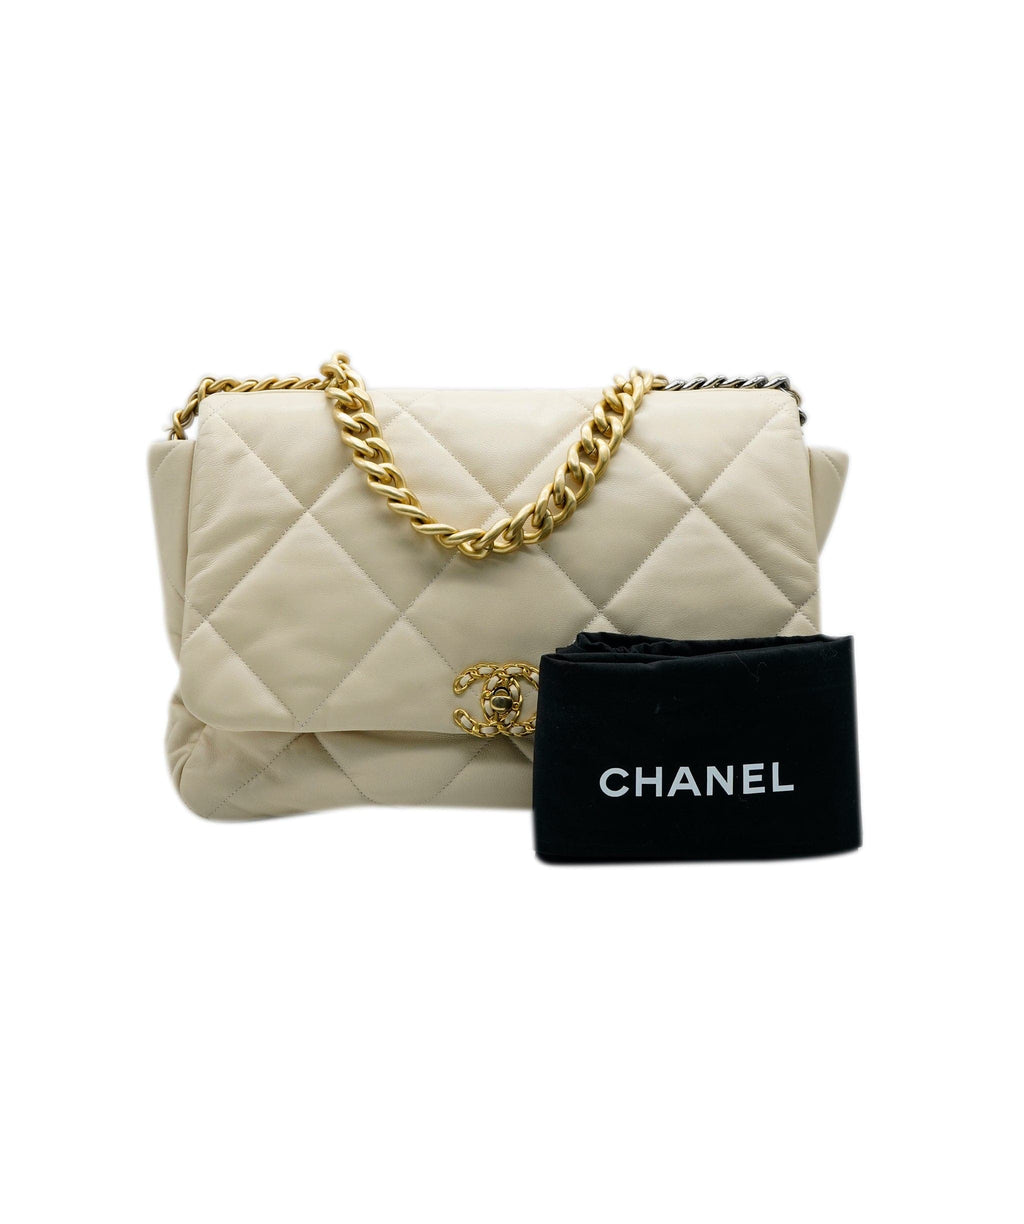 Chanel Cream Large 19 Bag - AGC1463